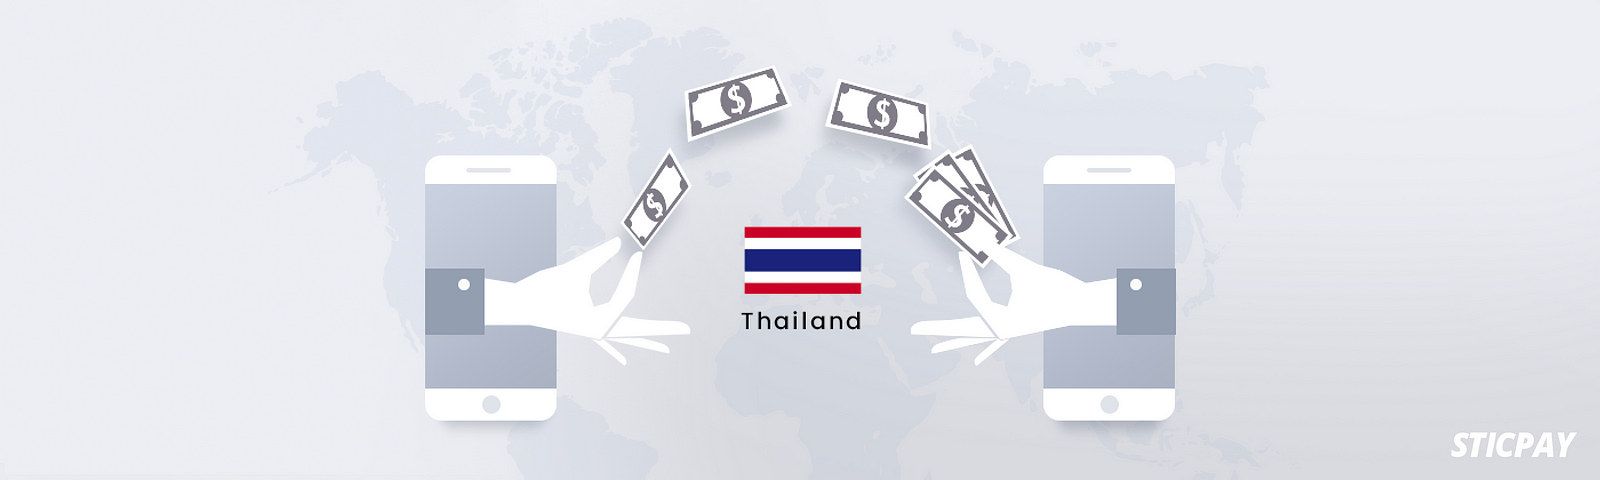 International money transfer policy: Thailand